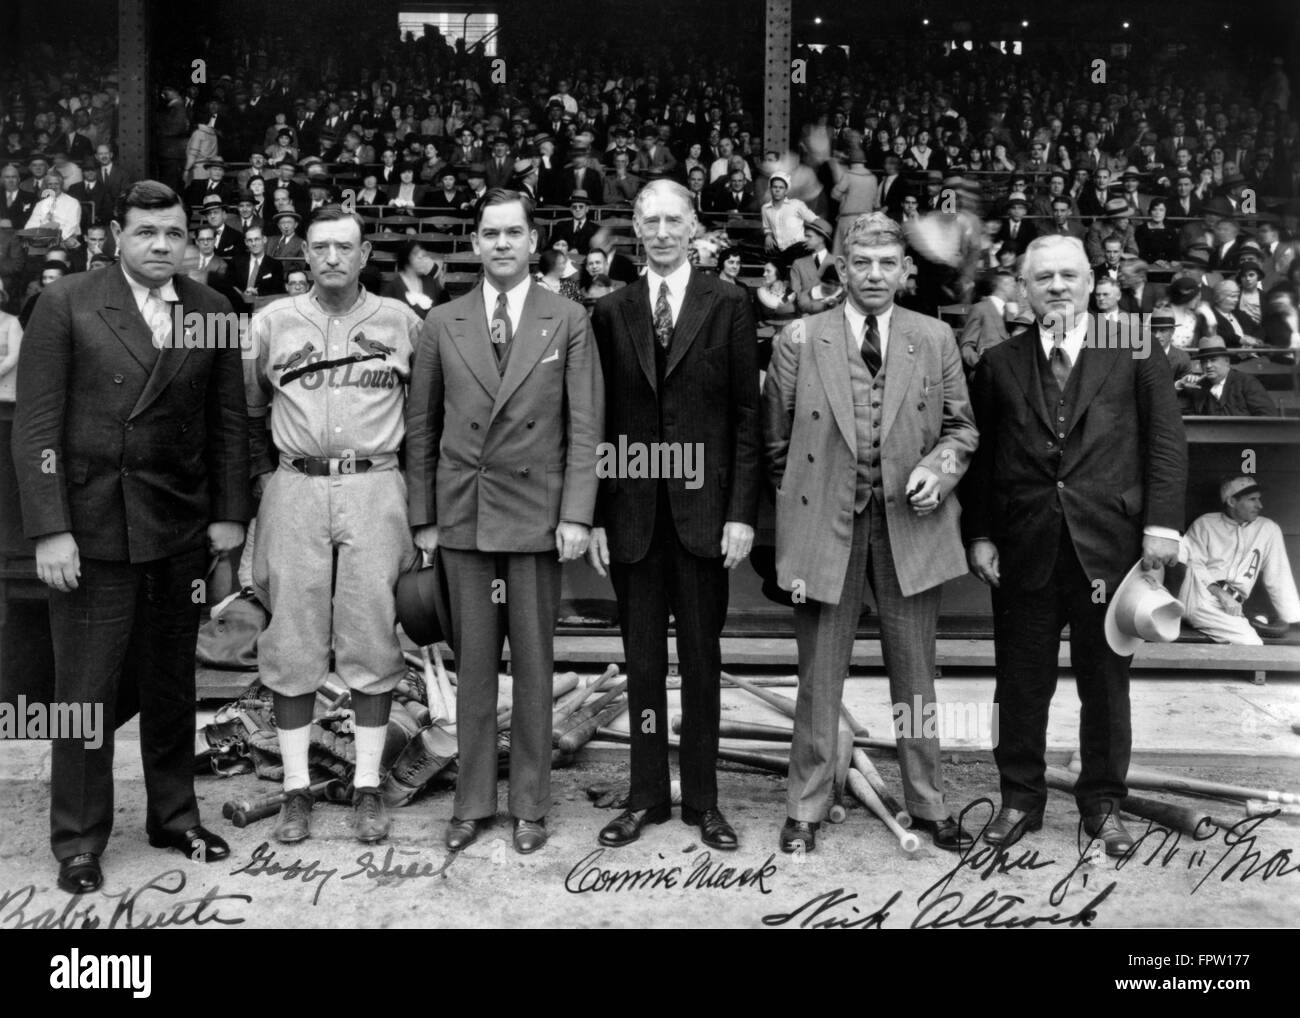 1930s BASEBALL LUMINARIES BABE RUTH, GABBY STREET, CONNIE MACK, NICK ALTROCK, JOHN MCGRAW AT BASEBALL STADIUM LOOKING AT CAMERA Stock Photo